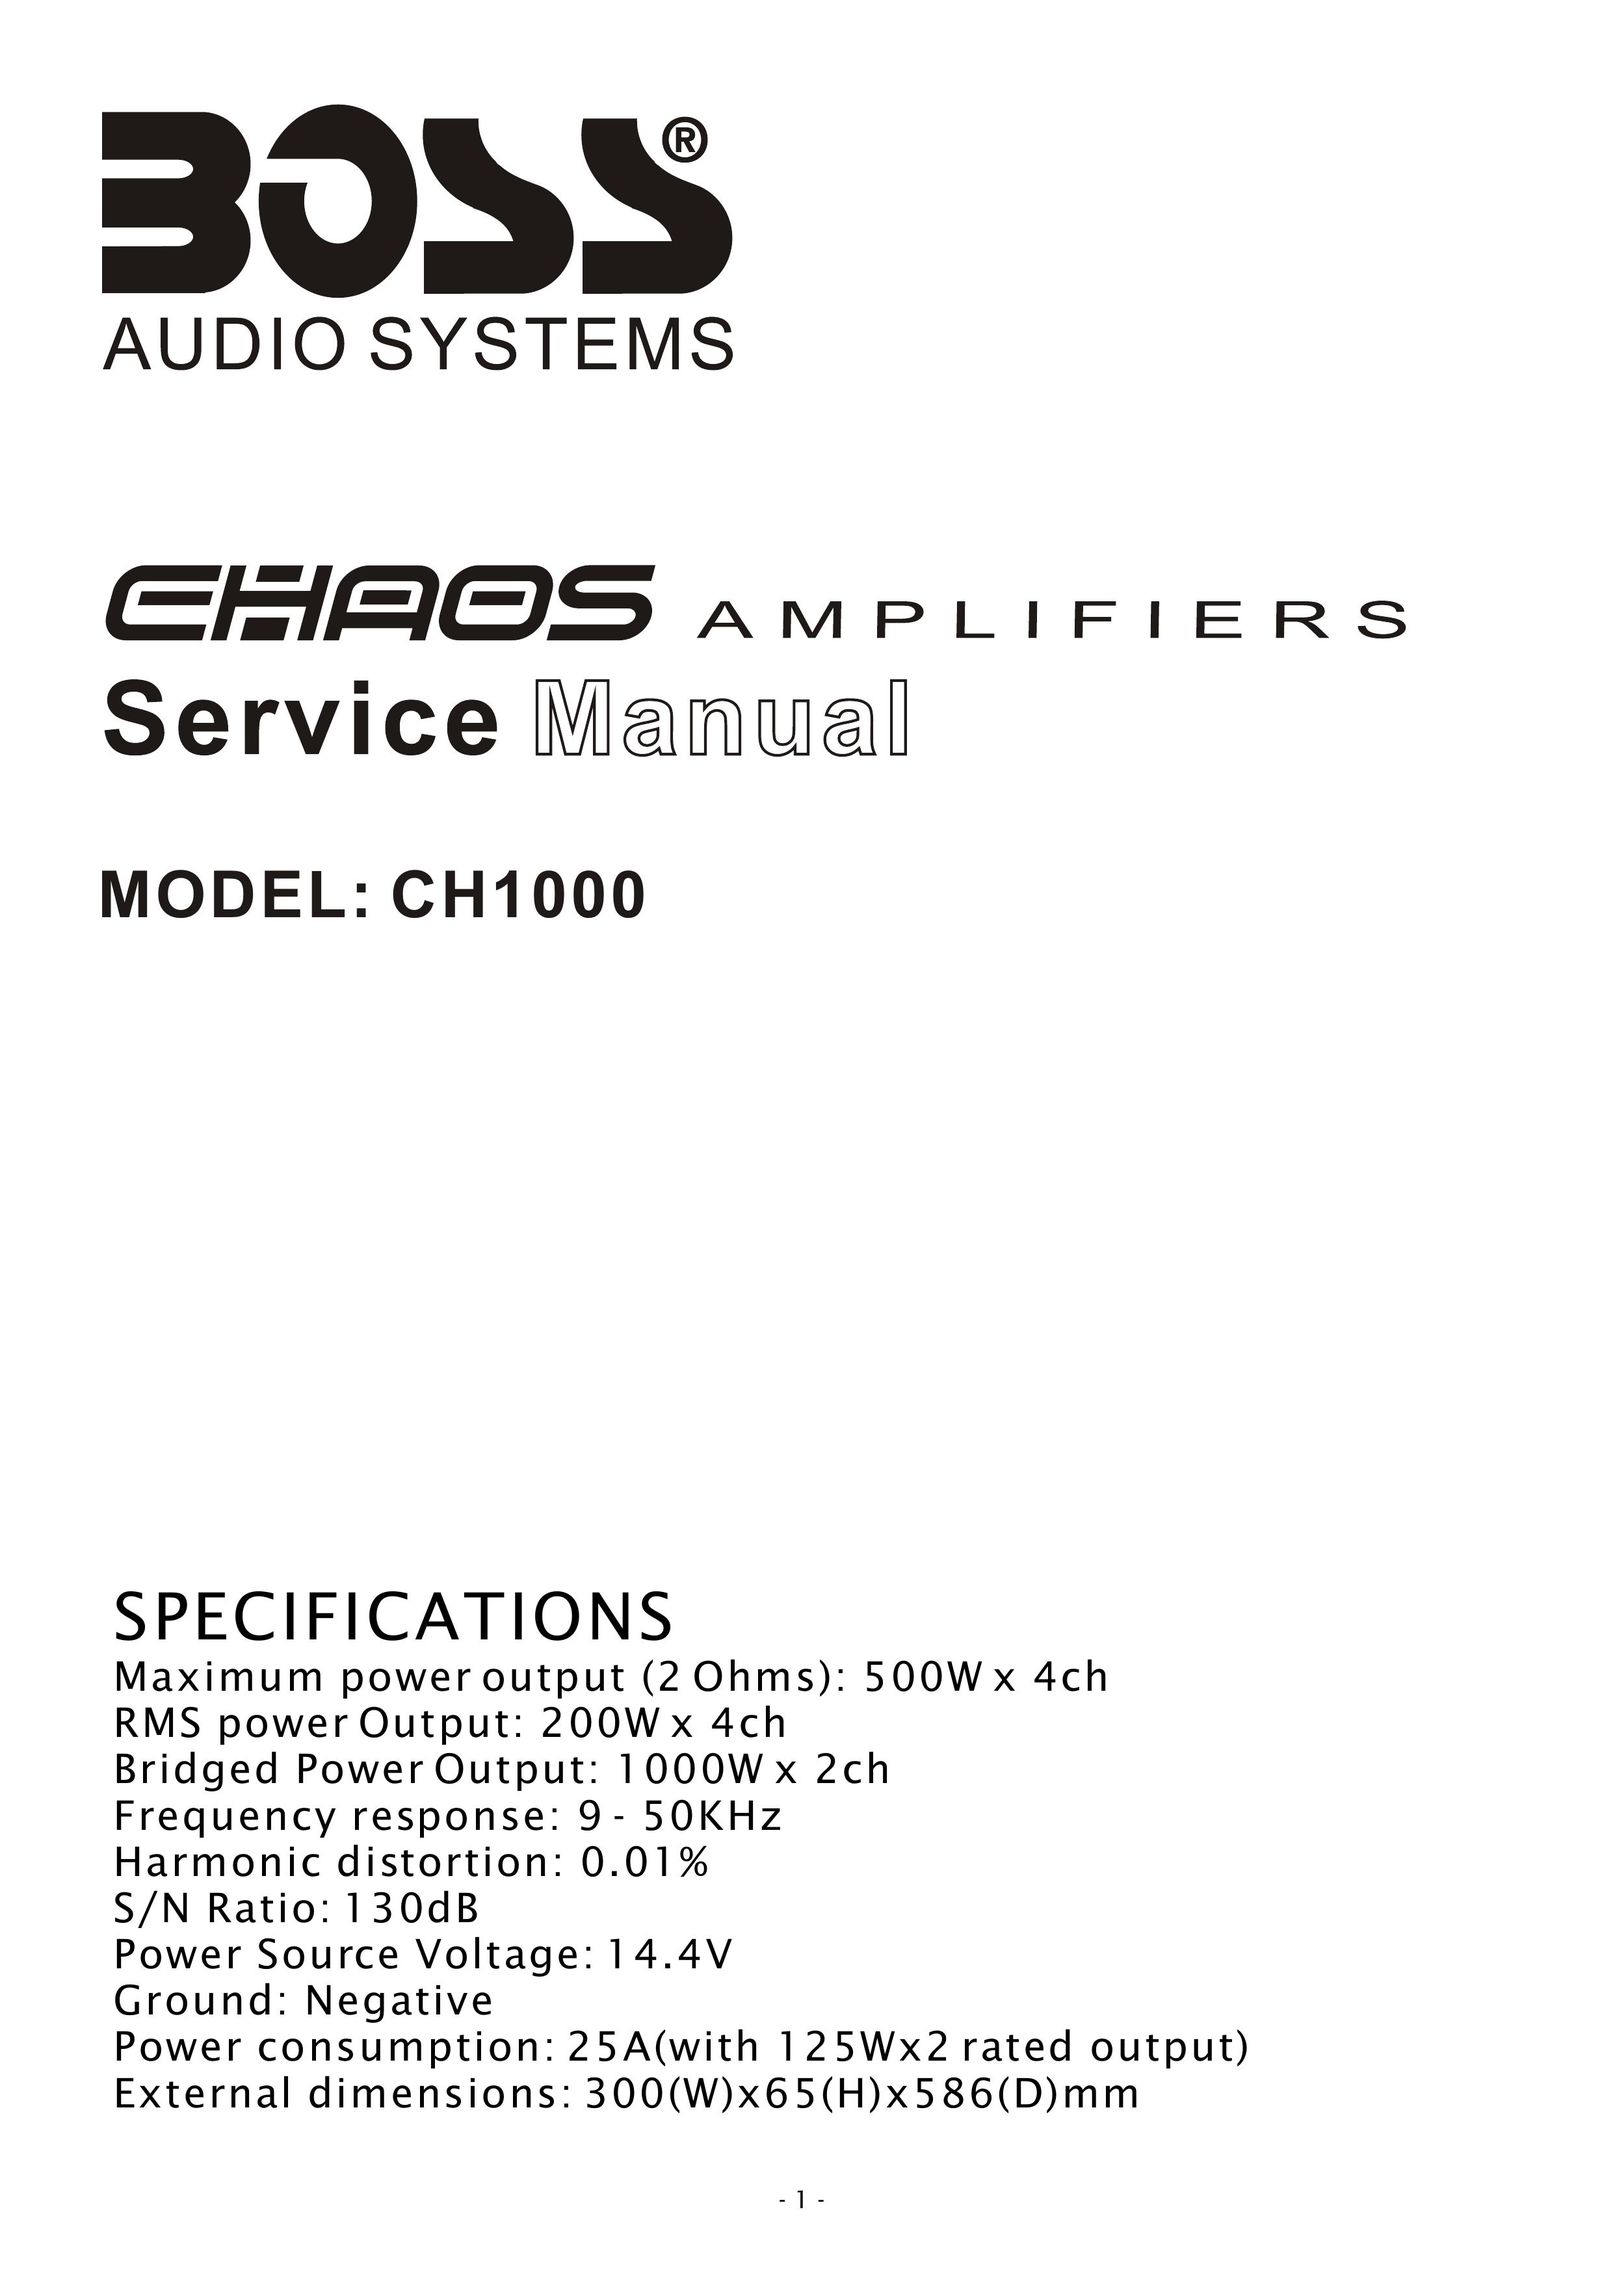 Boss Audio Systems CH1000 Car Amplifier User Manual